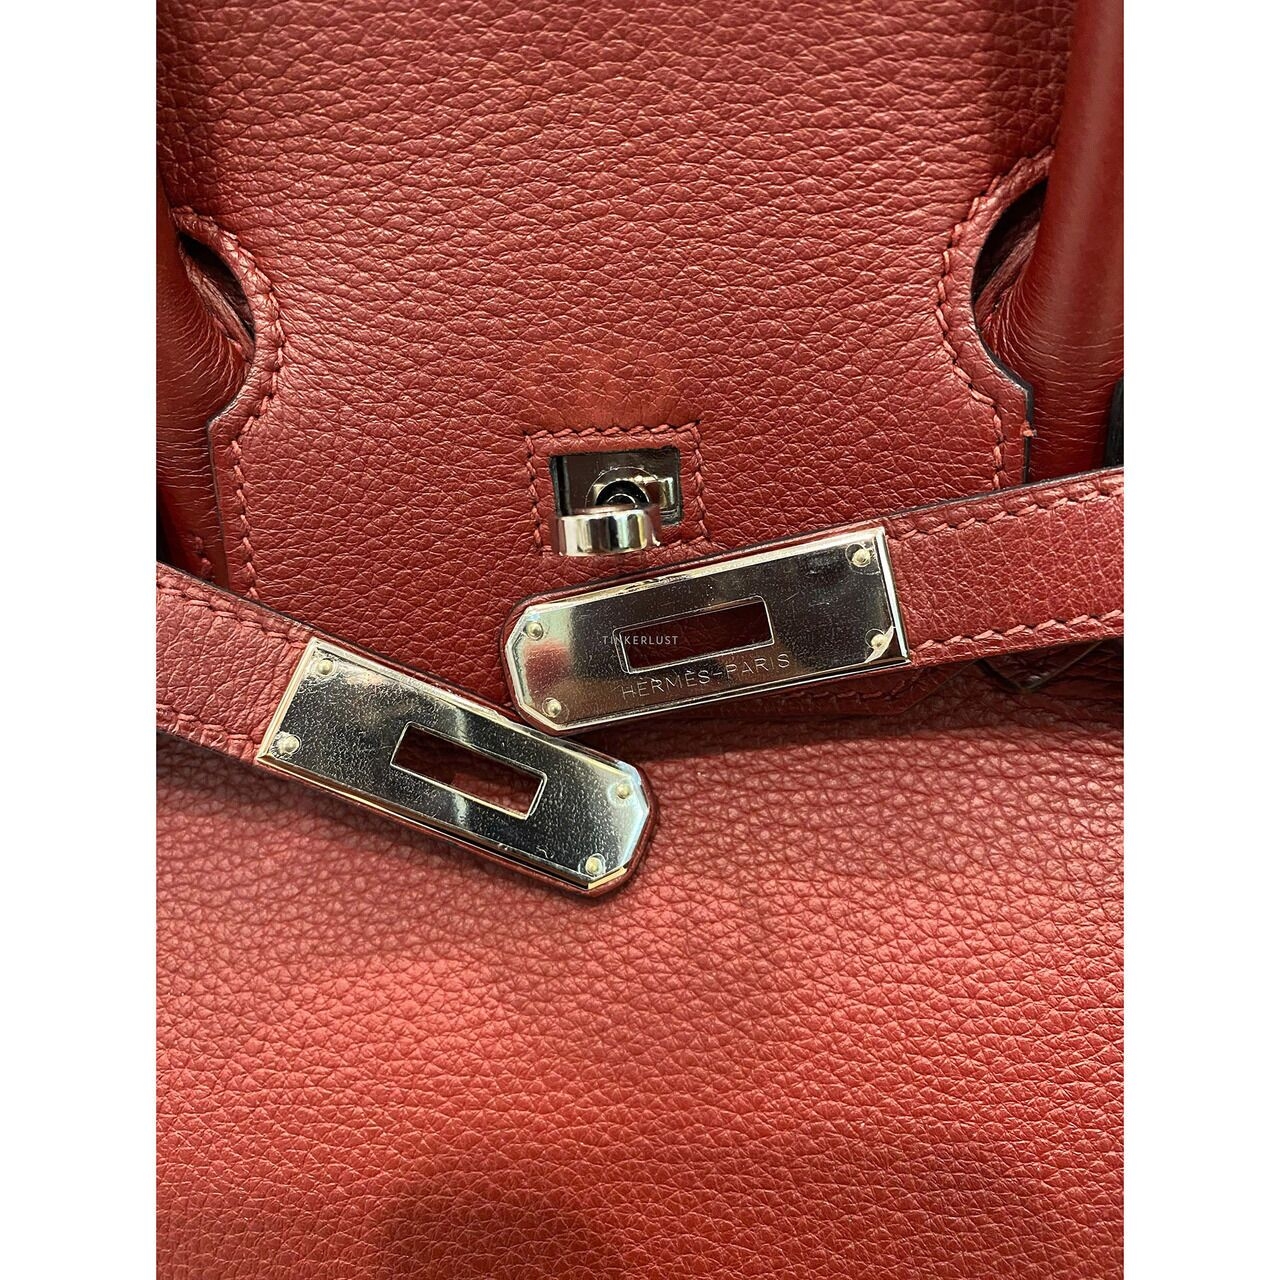 Hermes Birkin 35 Maroon Togo PHW #L Square 2008 Handbag